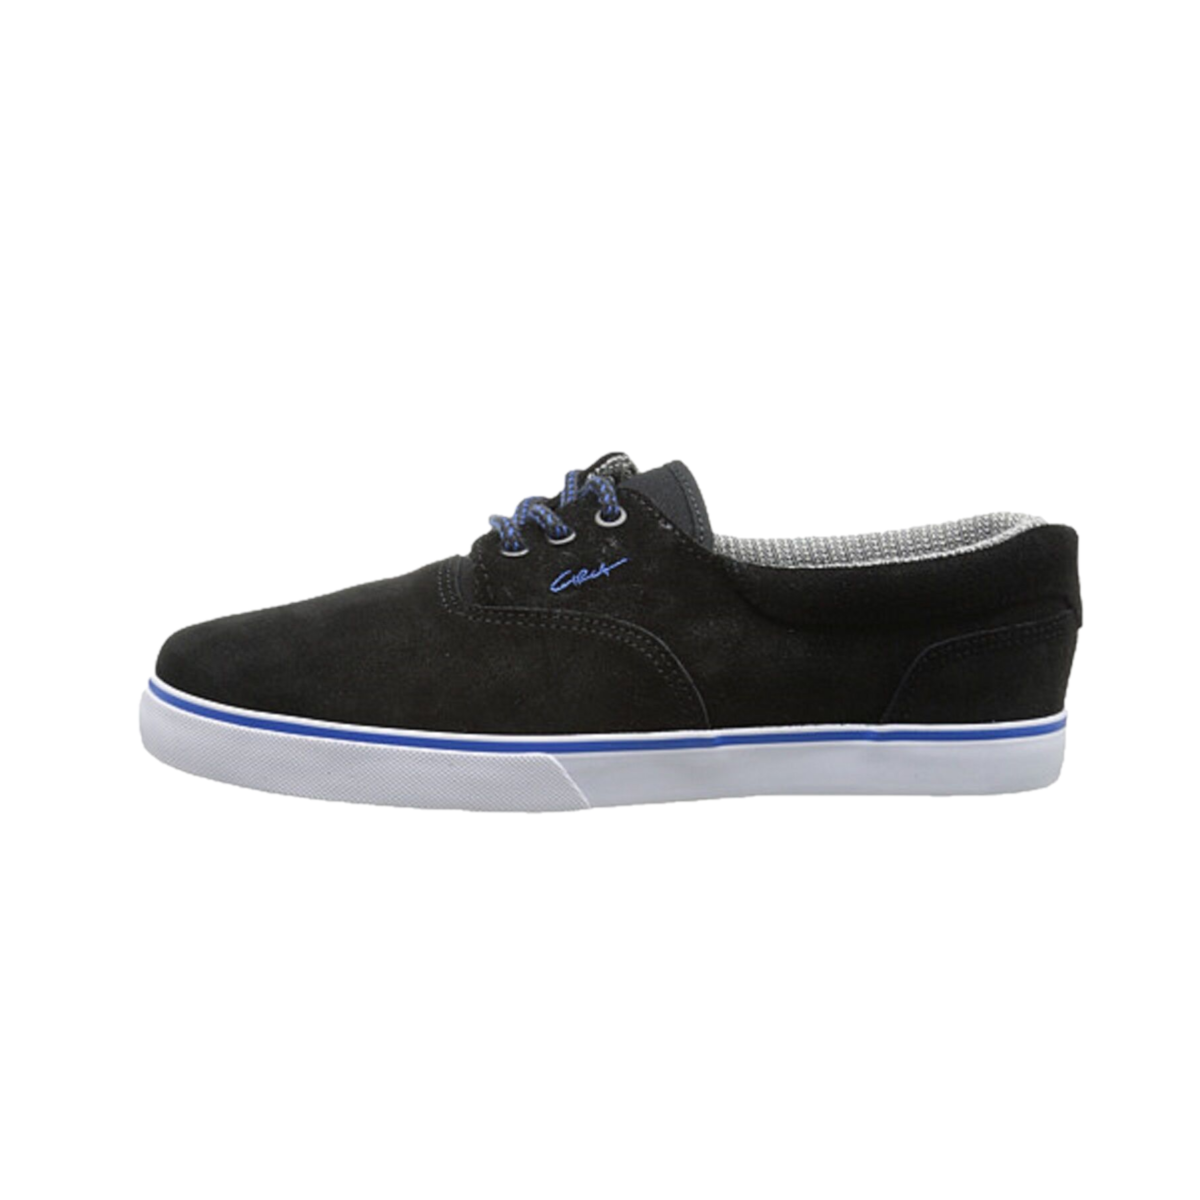 CIRCA VALEOSE-BKRE VALEO SE MN'S (Medium) Black/Regal Canvas Skate Shoes